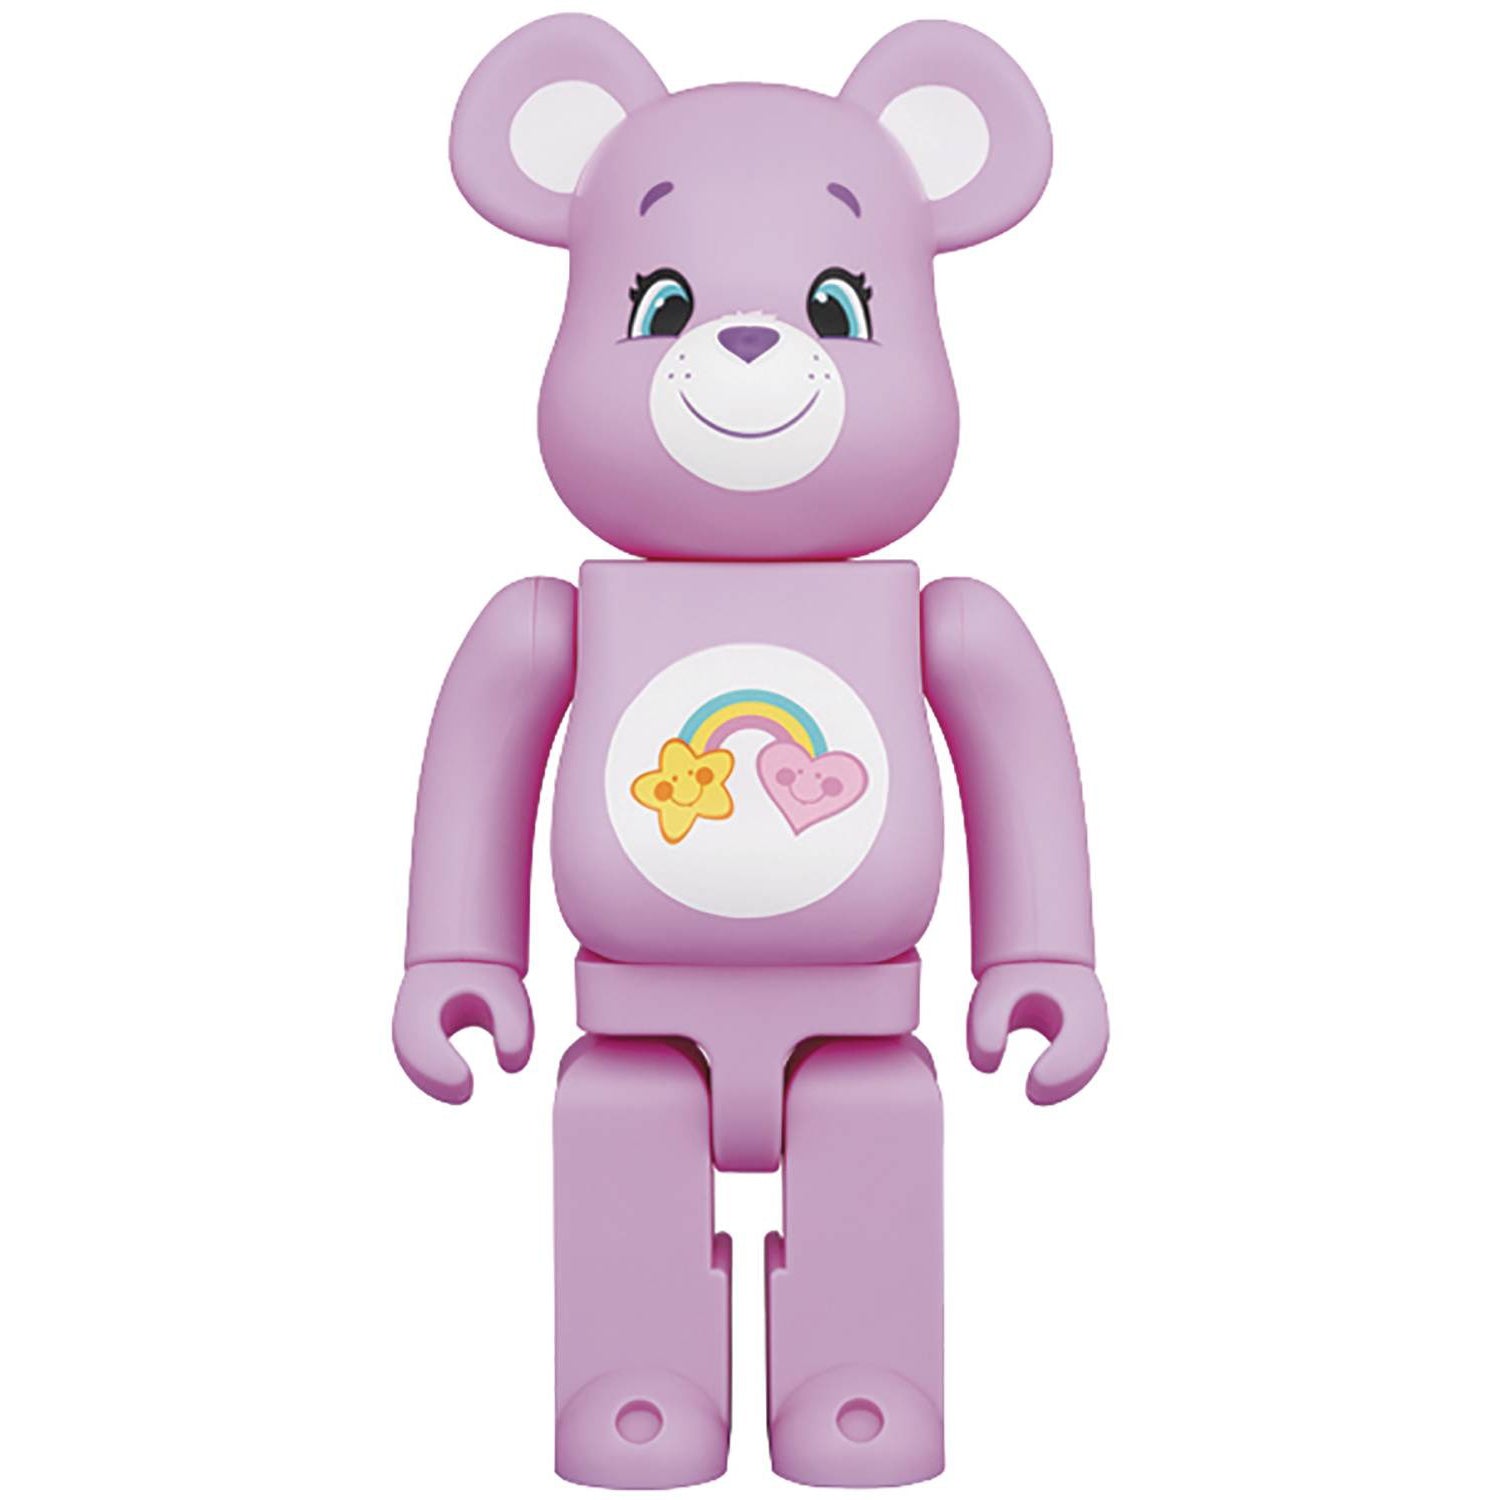 Medicom Japan Care Bears Best Friend Bear 1000% Bearbrick FEB229302I - COLLECTIBLES - Canada